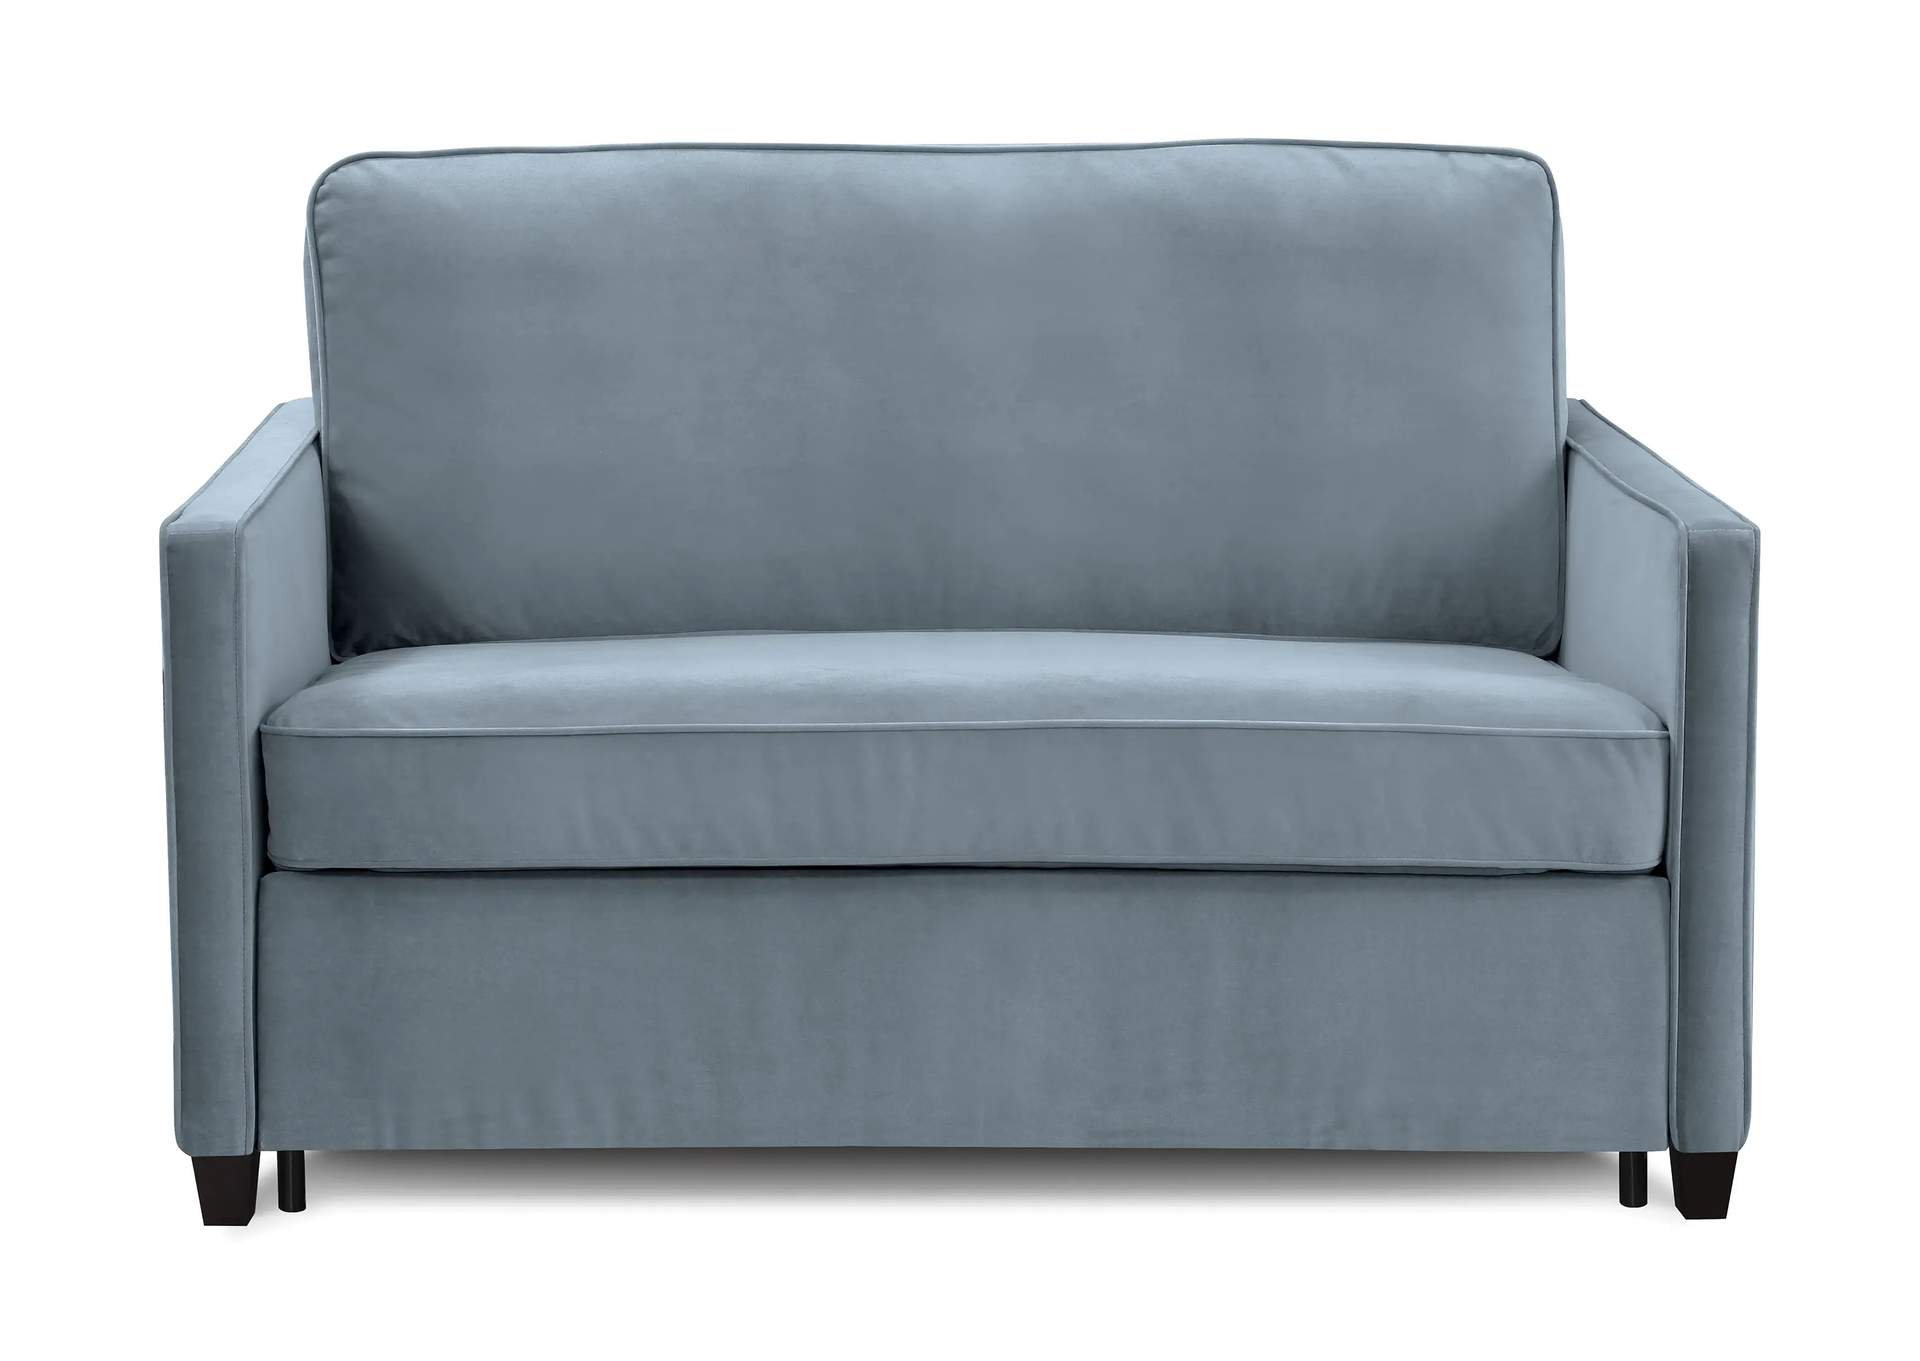 California Sofabed, Single, 1 Cushion,Palliser Furniture